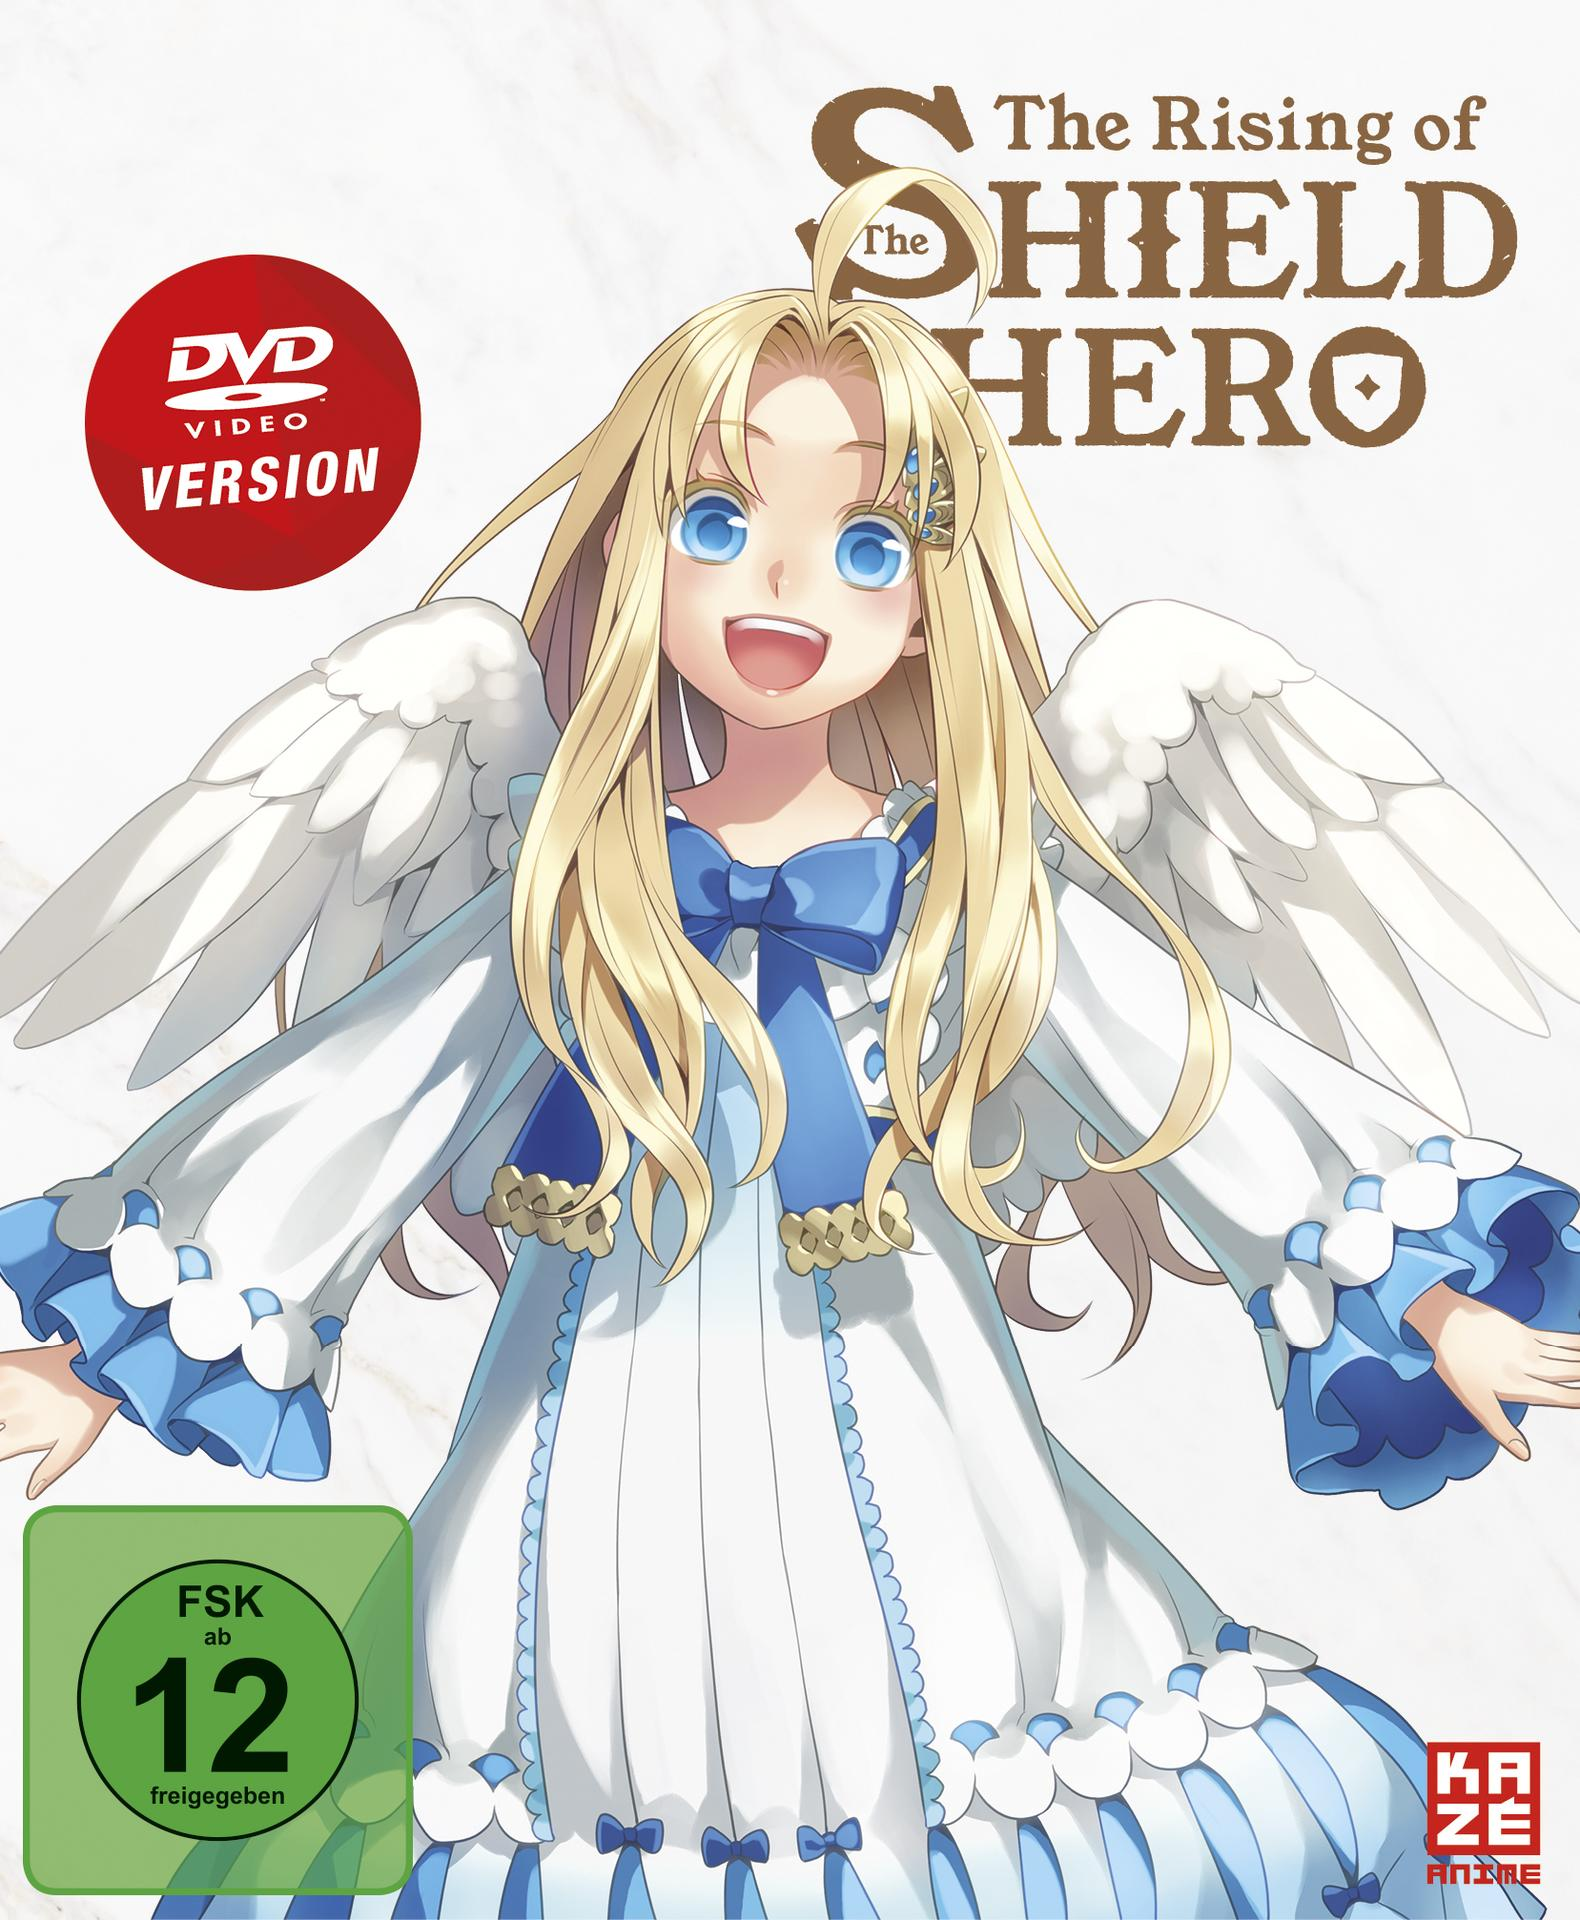 of - the - The Staffel Vol.3 1 Shield Hero Rising DVD